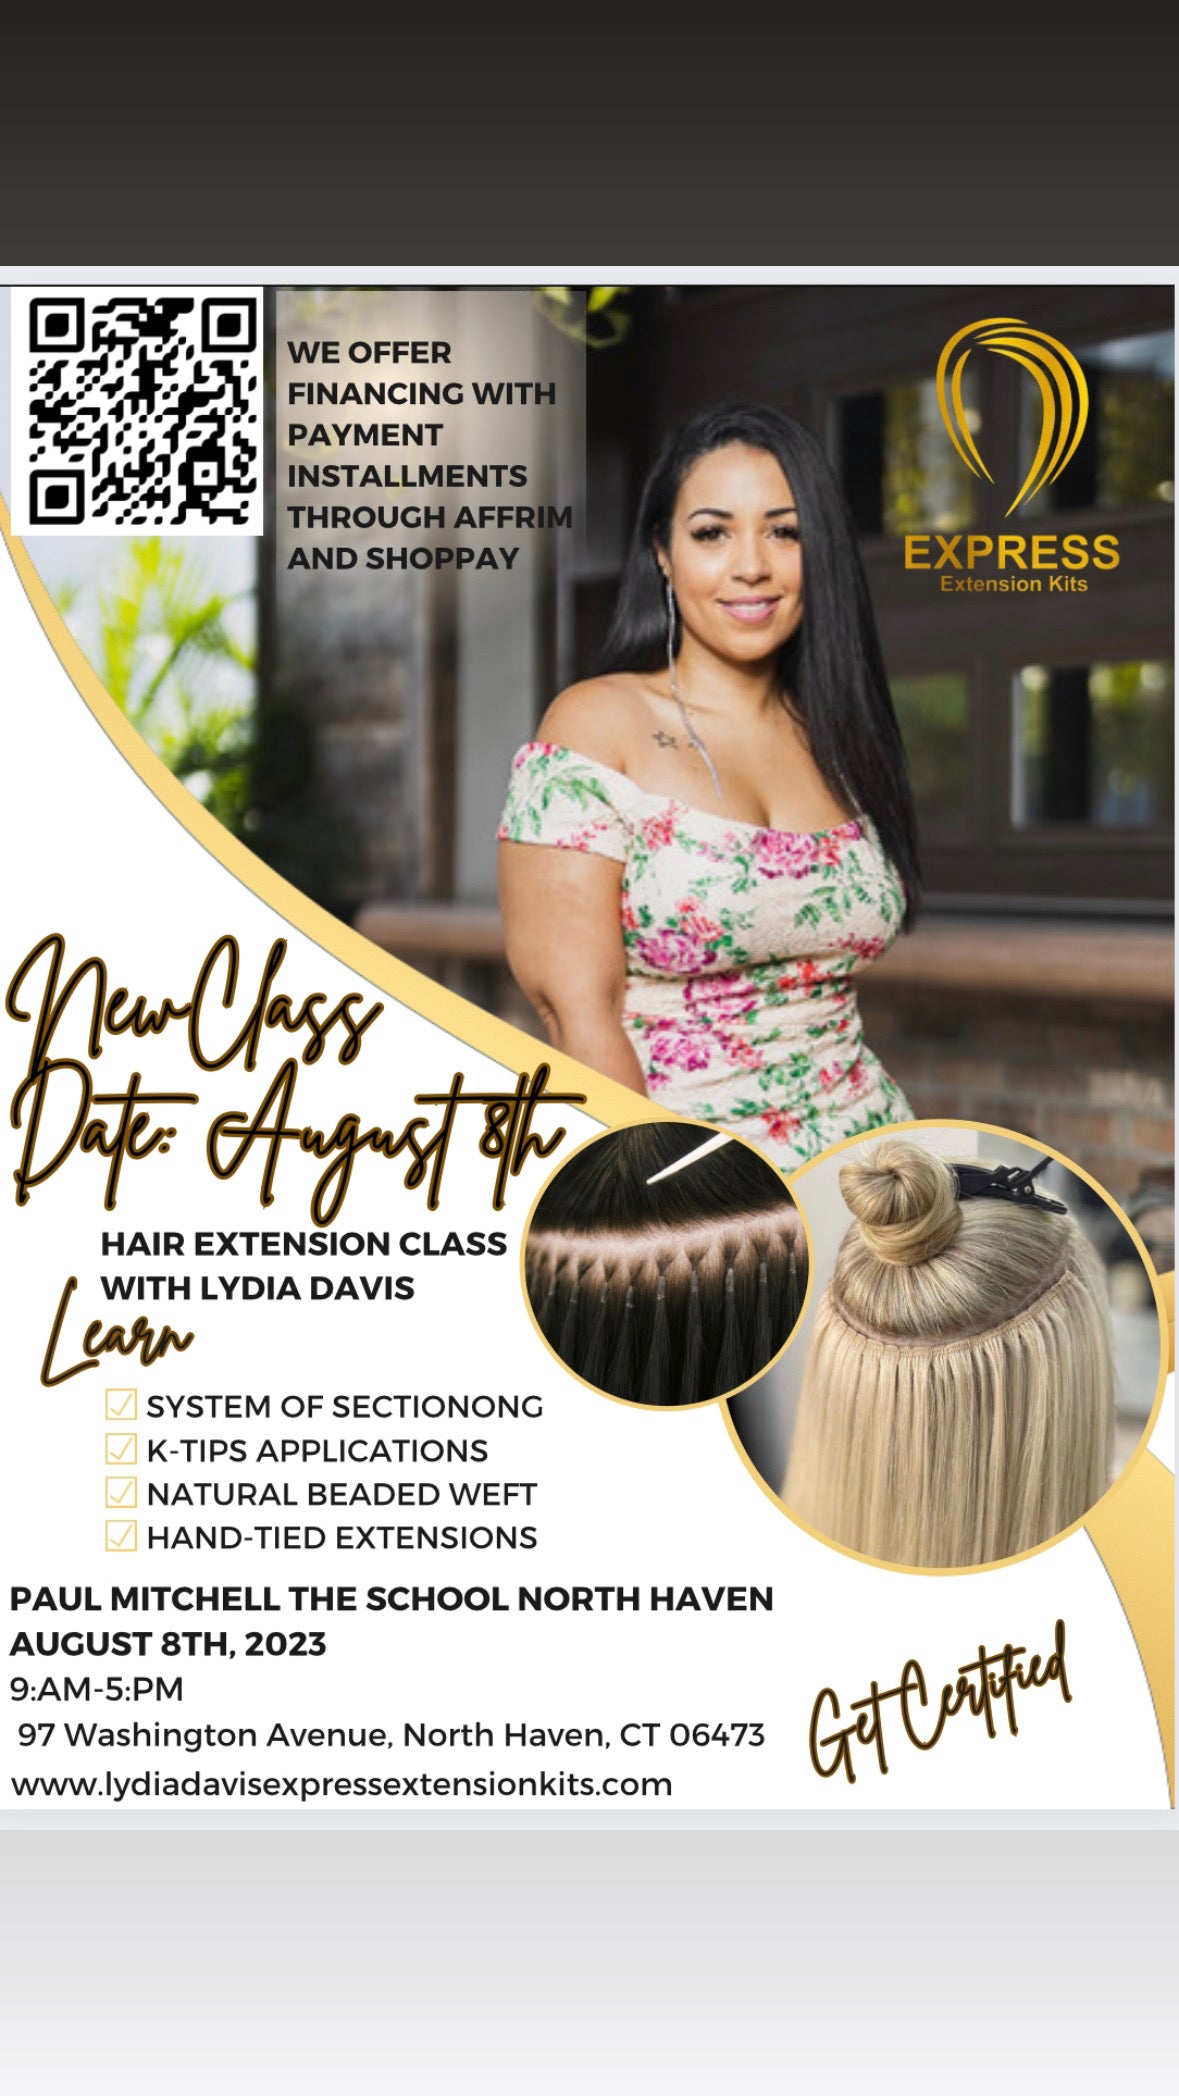 Custom Wig Certification Class and kit – Lydia Davis Express